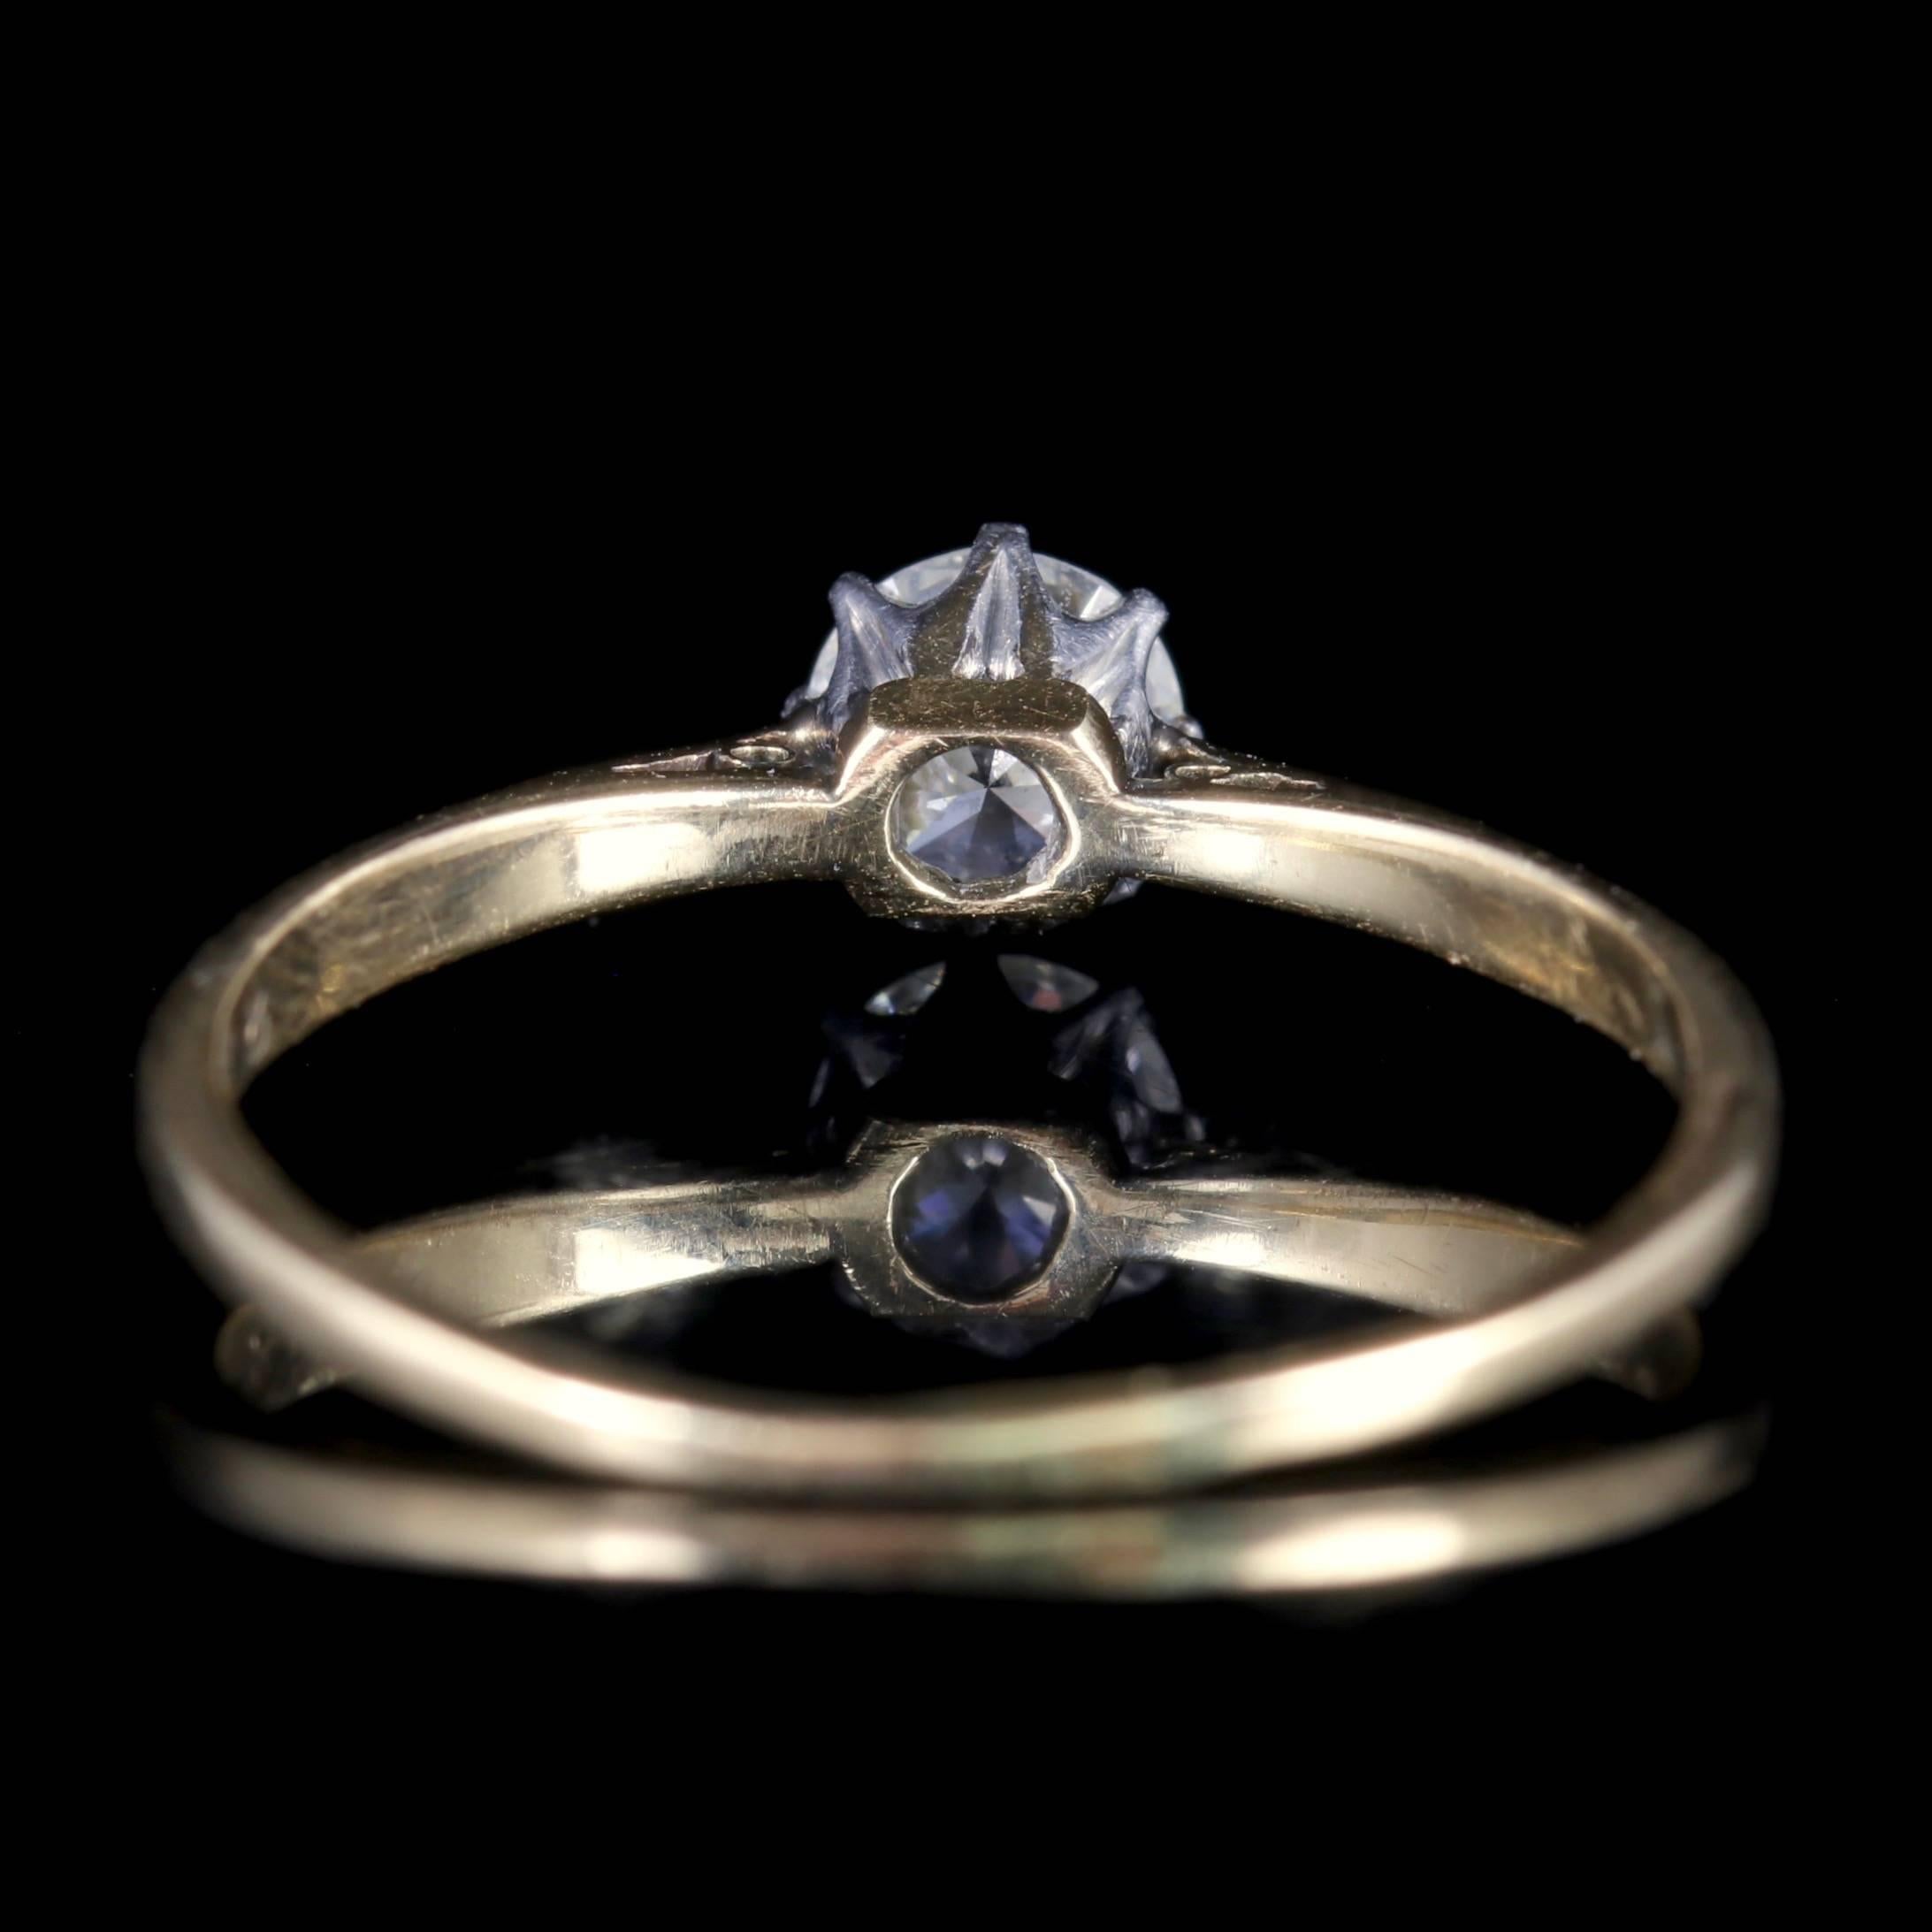 Women's Antique Edwardian Diamond Solitaire Ring, circa 1901